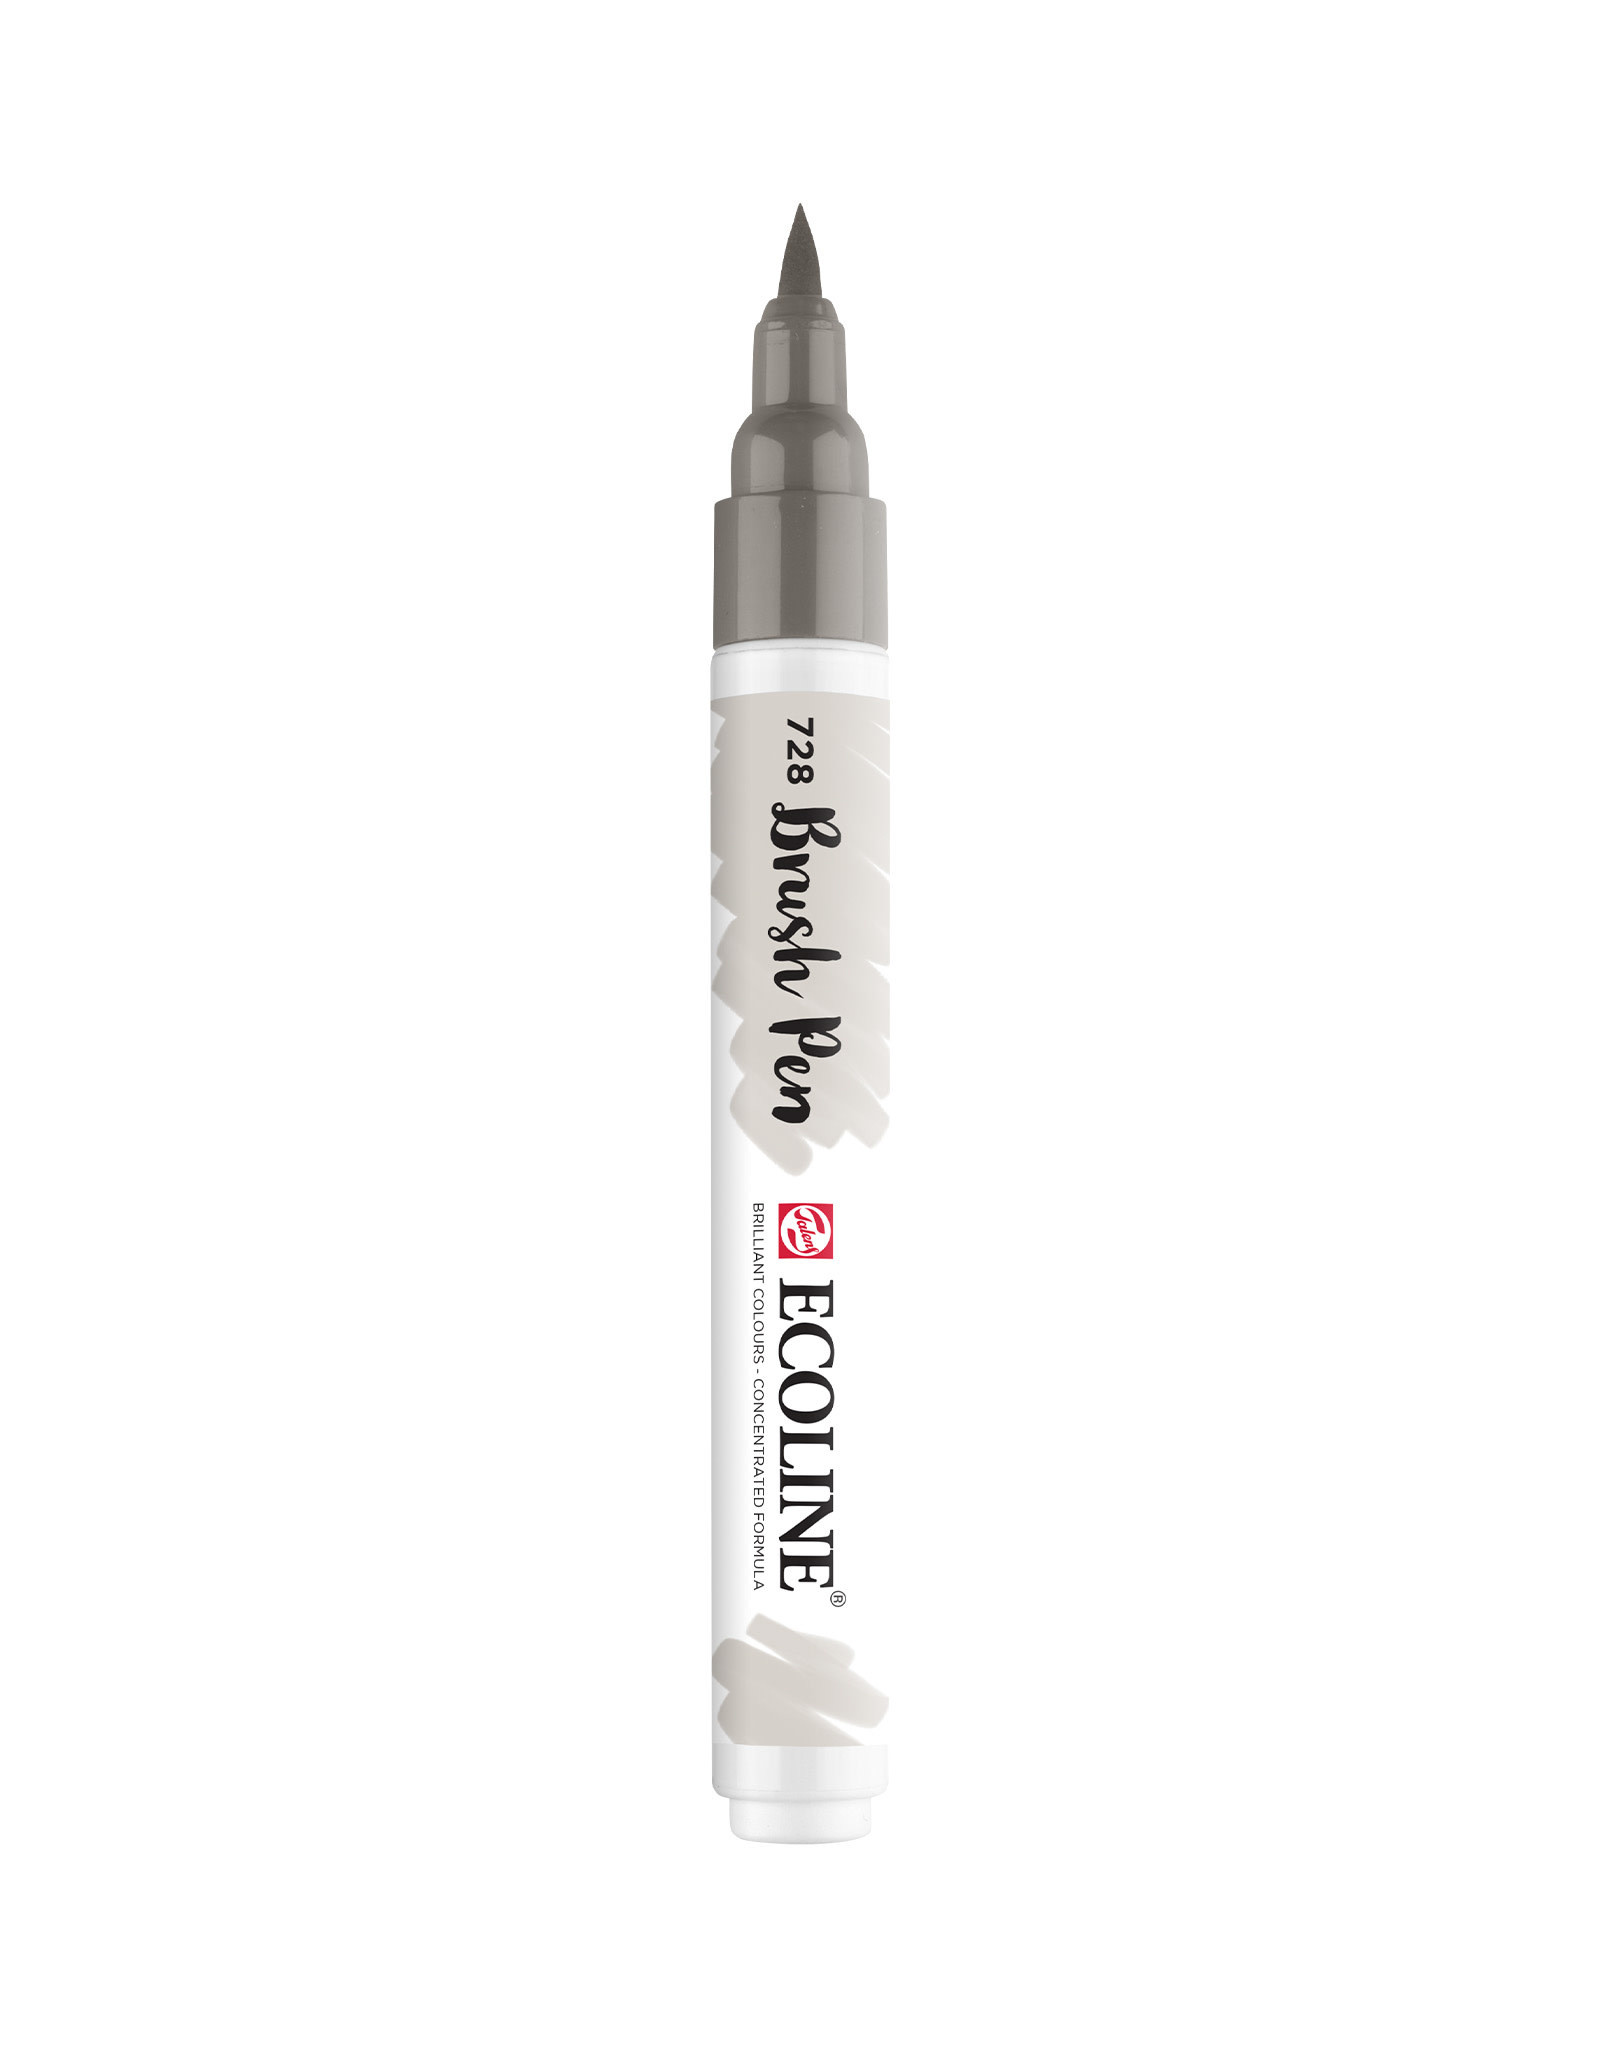 Royal Talens Ecoline Watercolour Brush Pen, Warm Grey Light